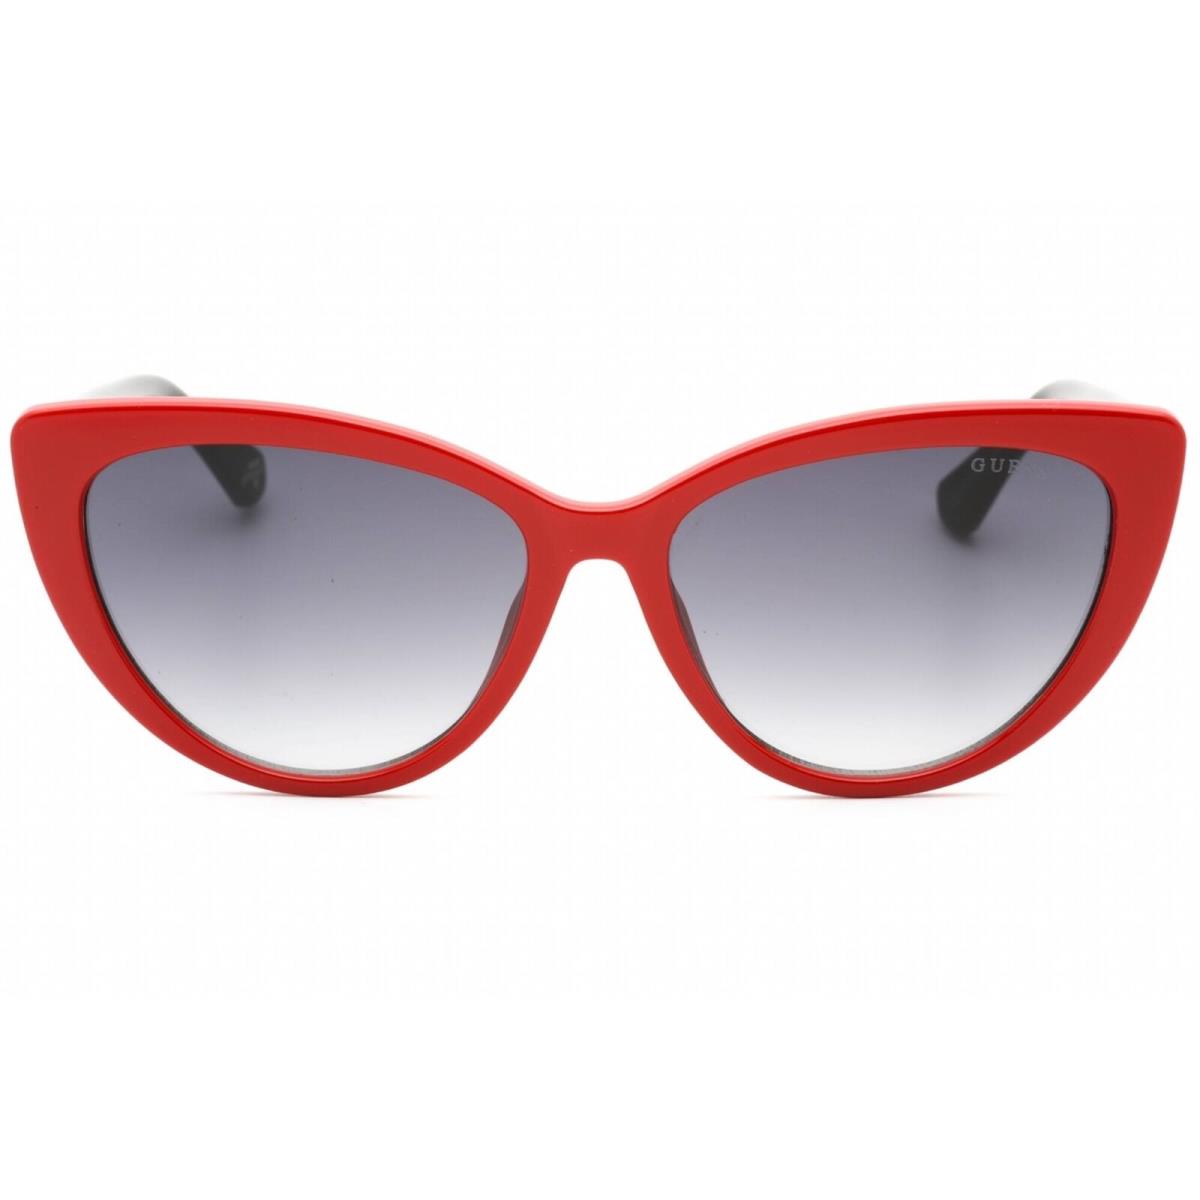 Guess Women`s Sunglasses Gradient Smoke Lens Shiny Red Cat Eye Frame GU5211 66B